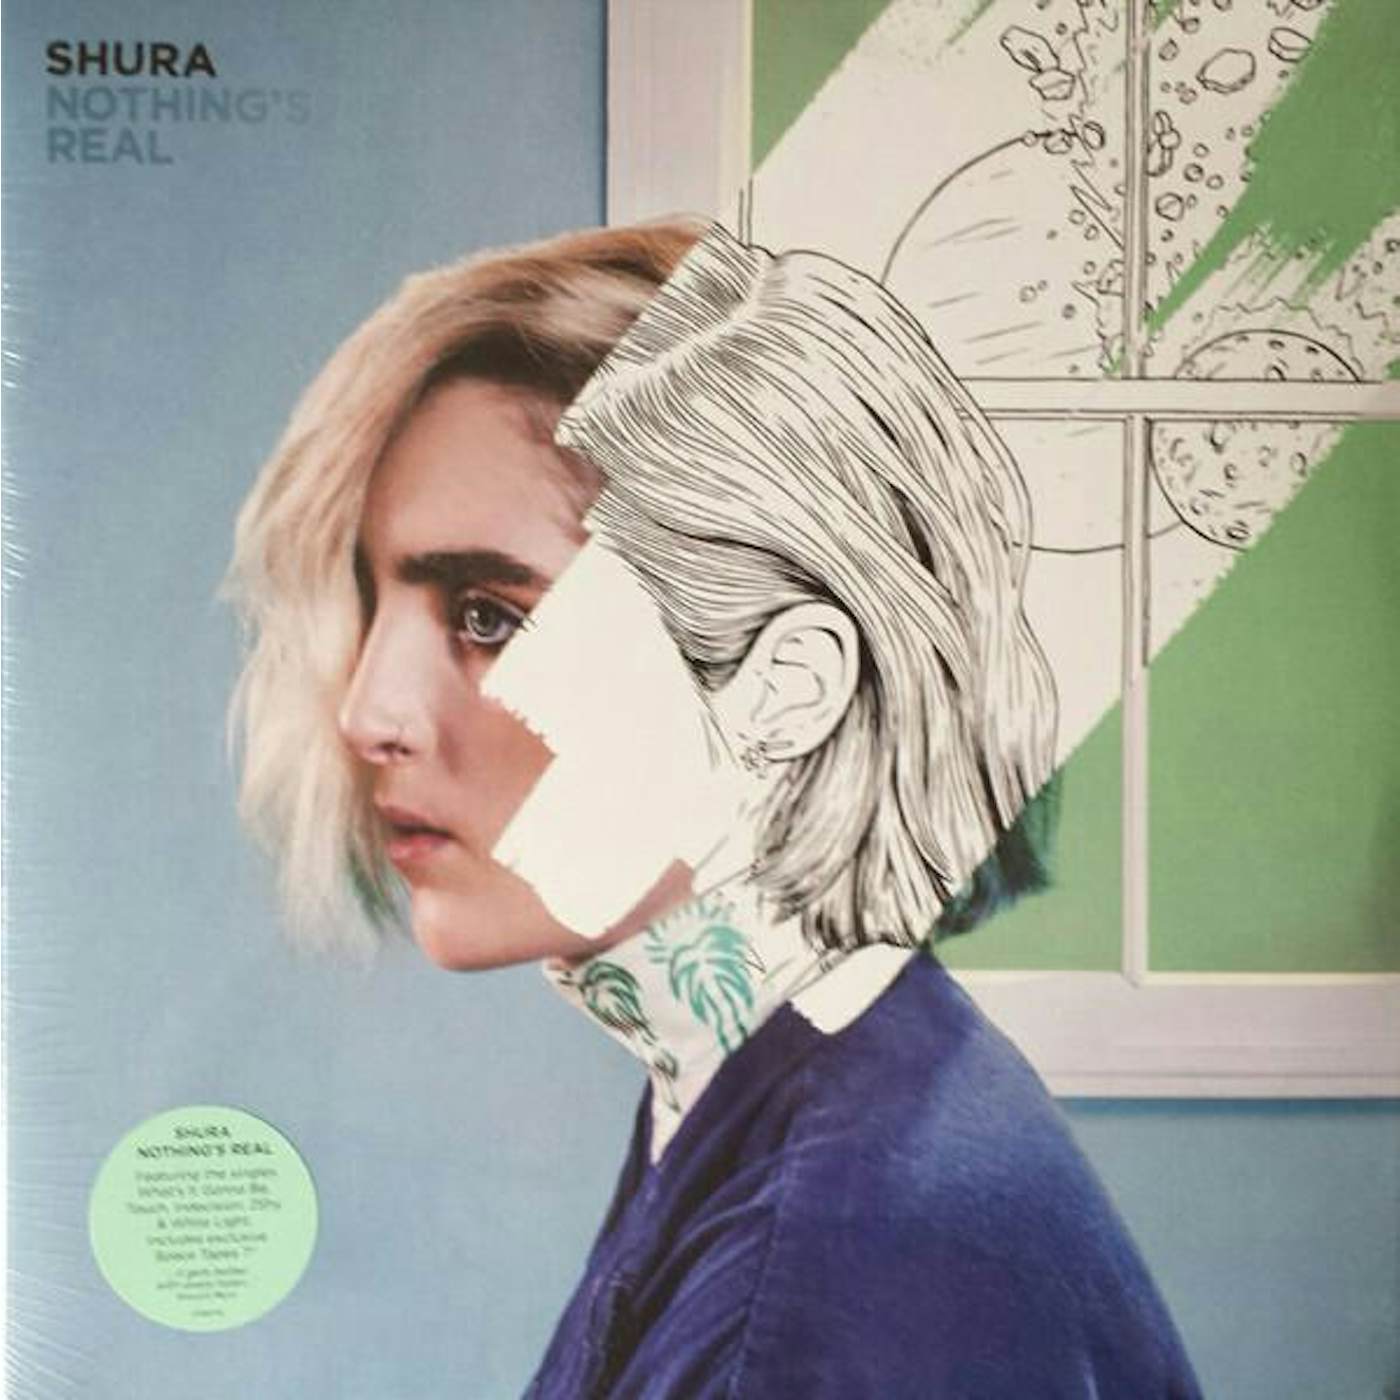 Shura Nothing's Real Vinyl Record